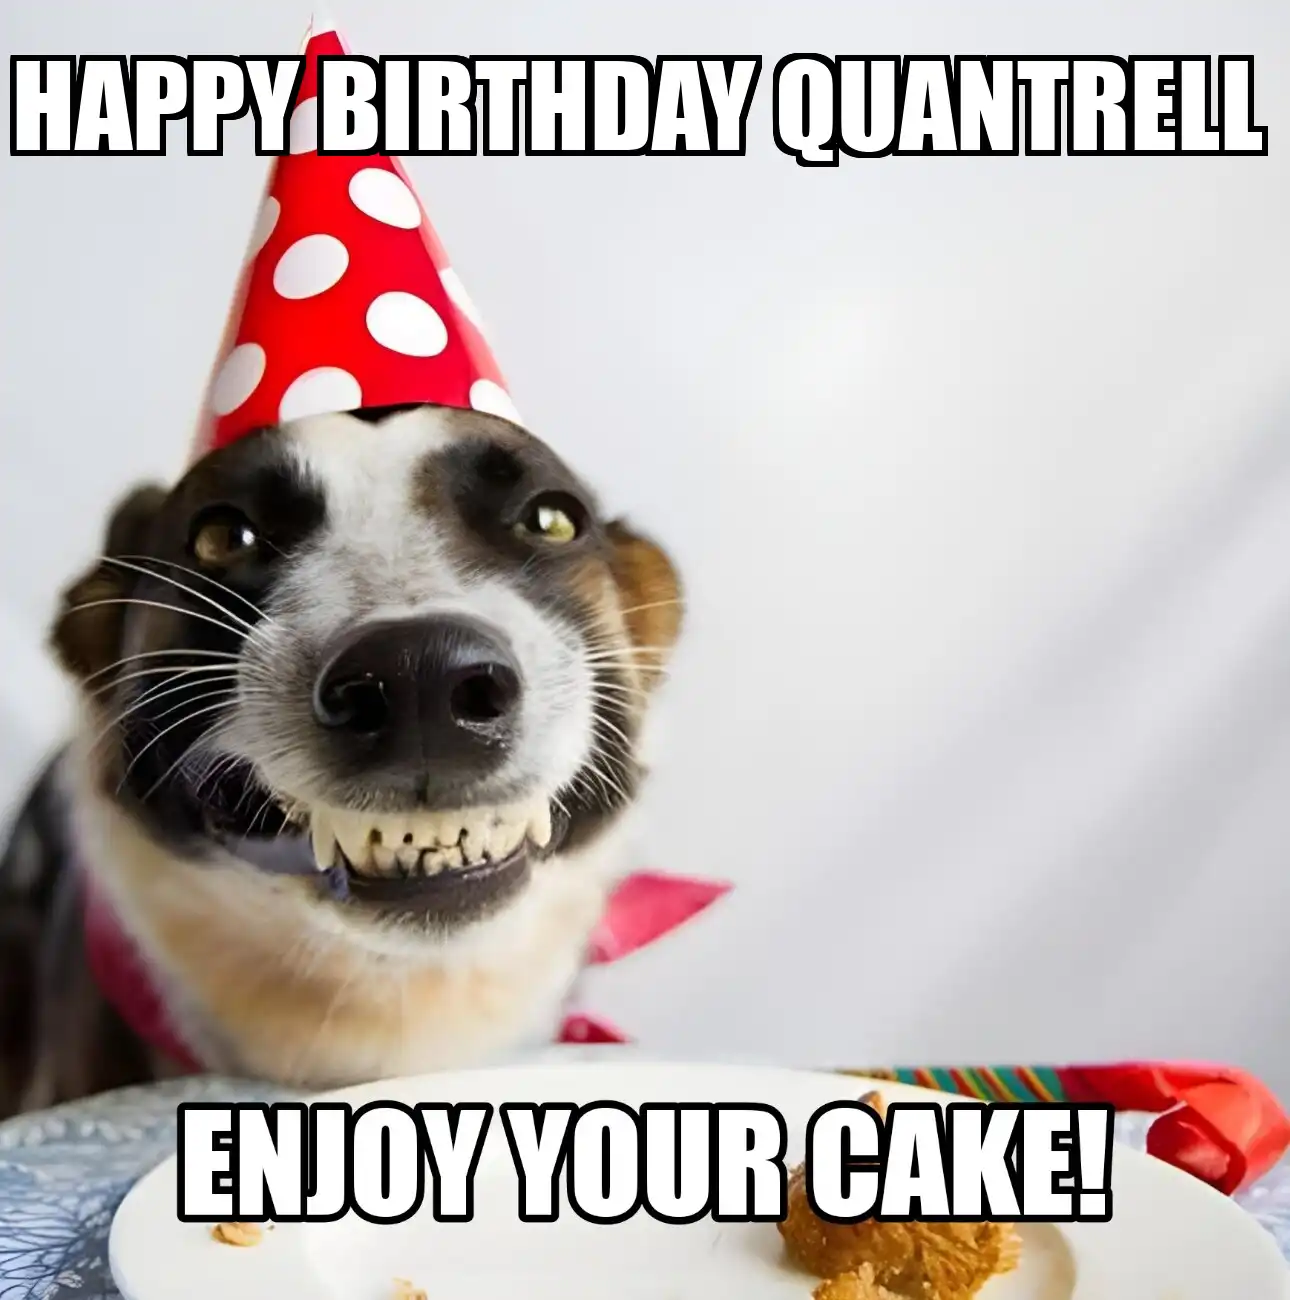 Happy Birthday Quantrell Enjoy Your Cake Dog Meme